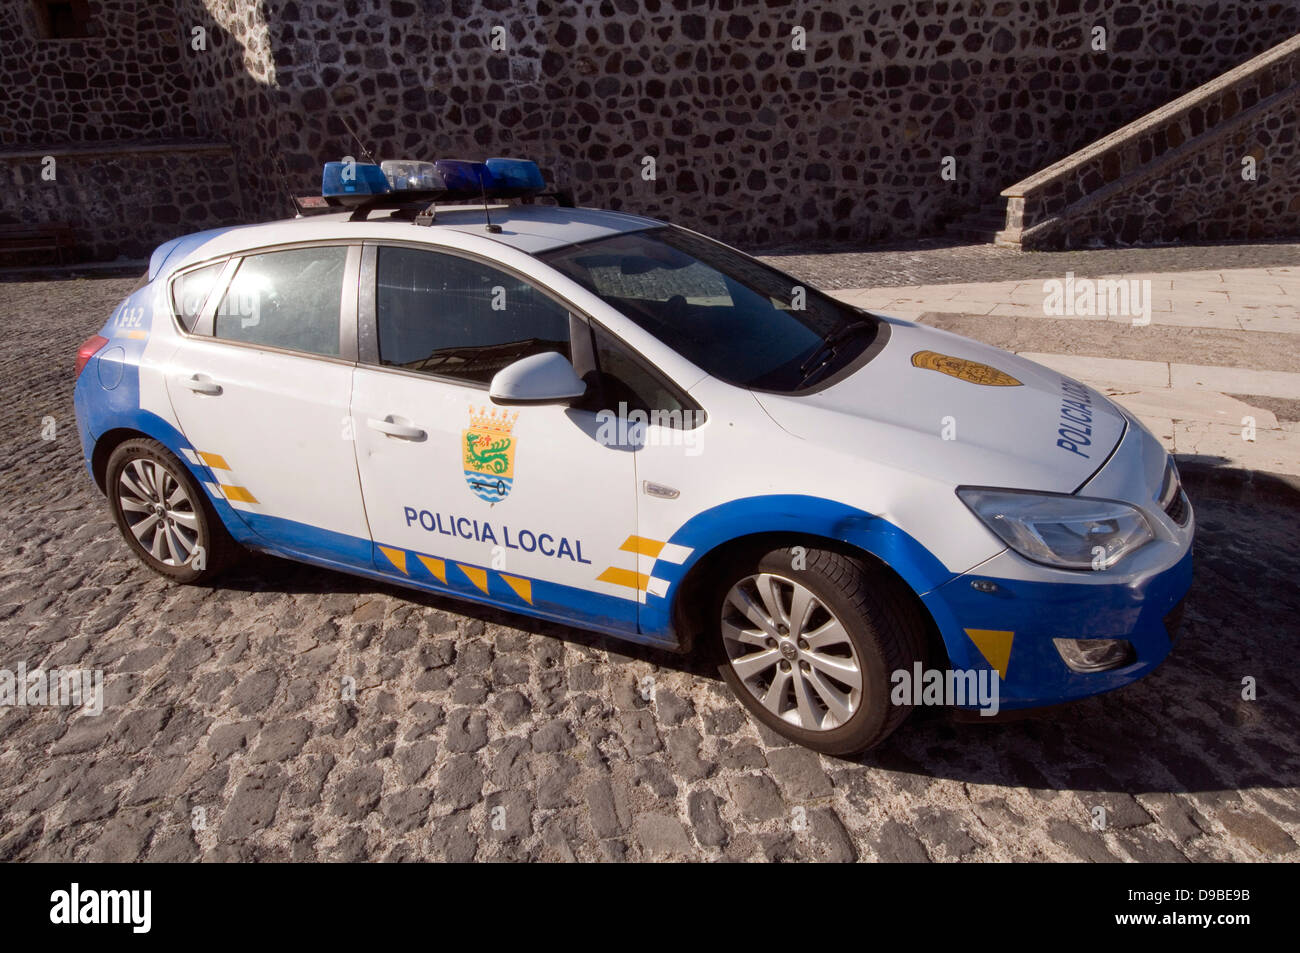 Coche policia español fotografías e imágenes de alta resolución - Alamy